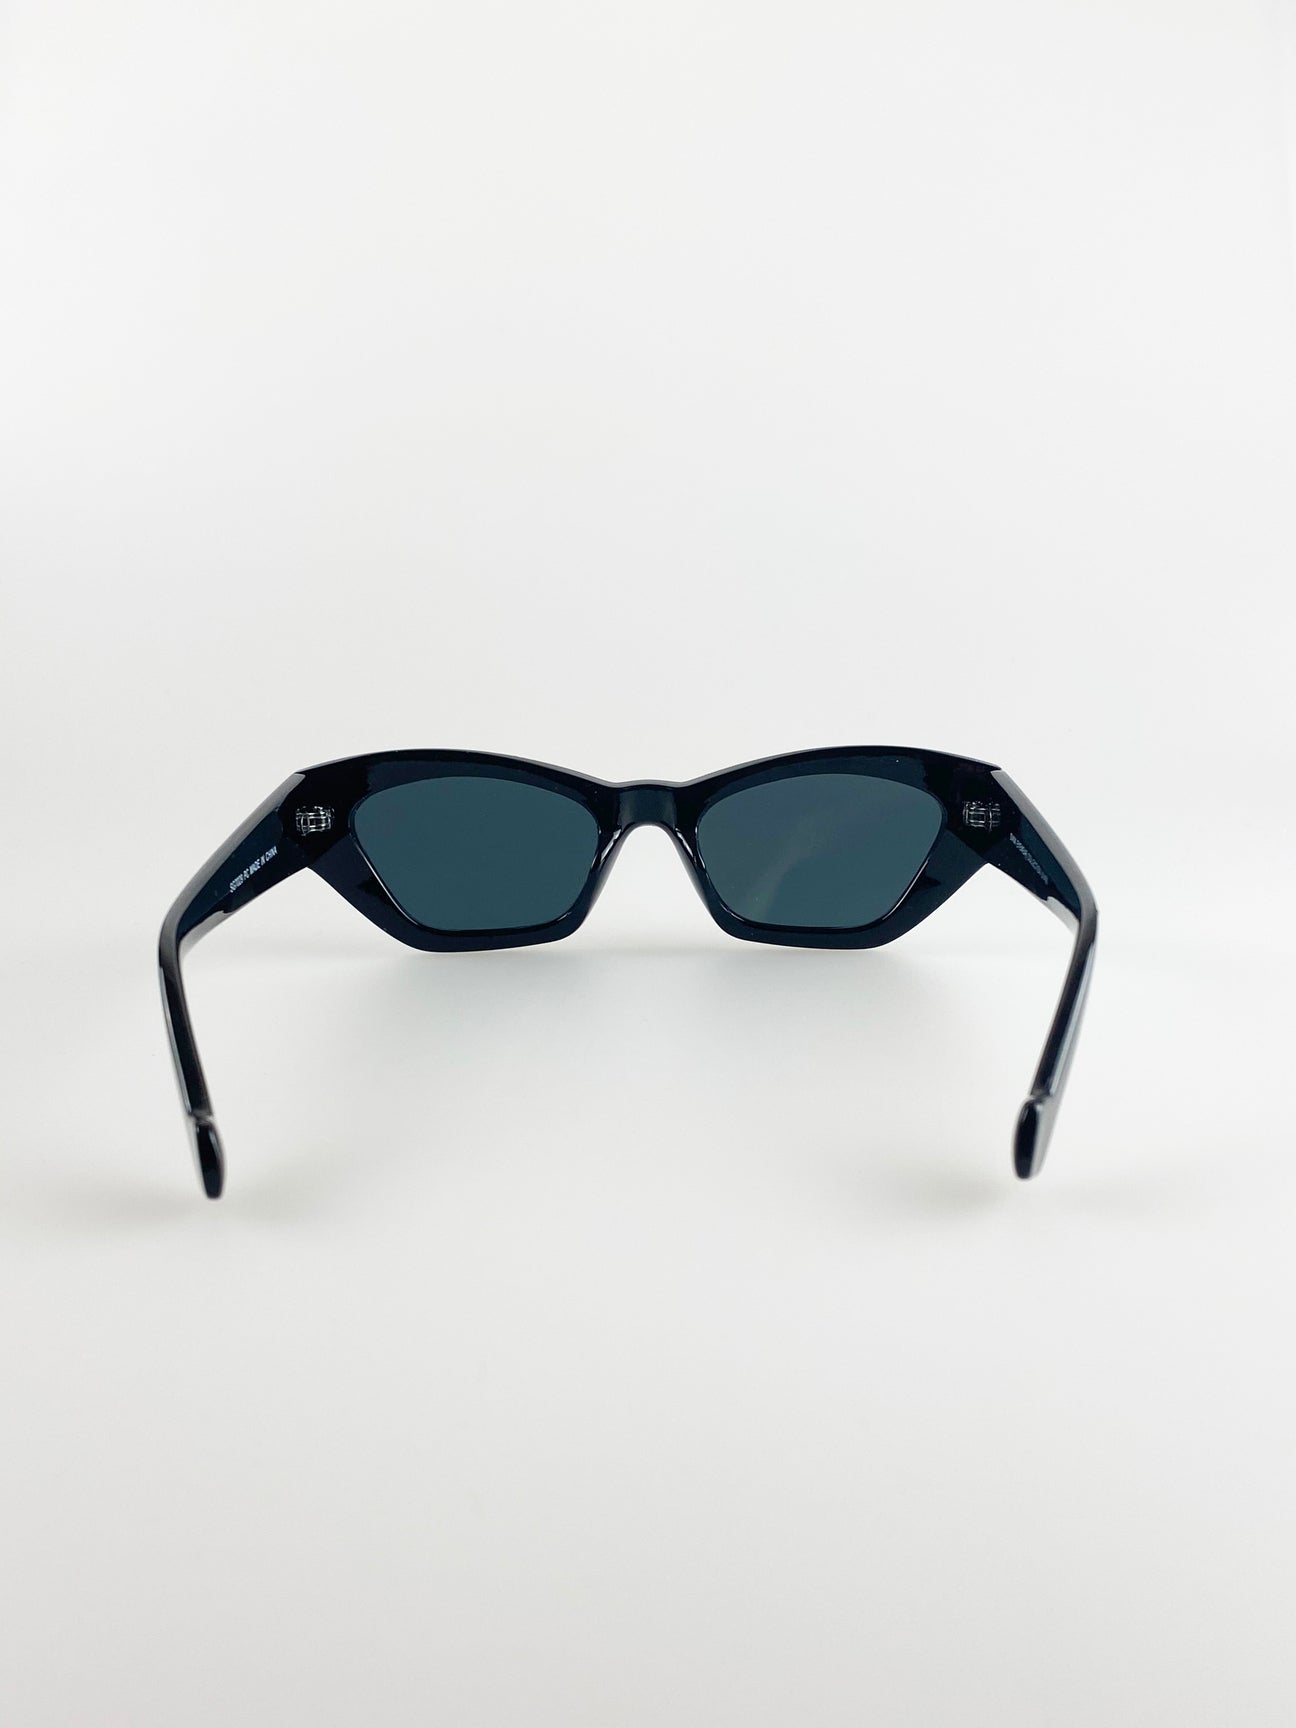 Black Angled Sunglasses with Black Lenses